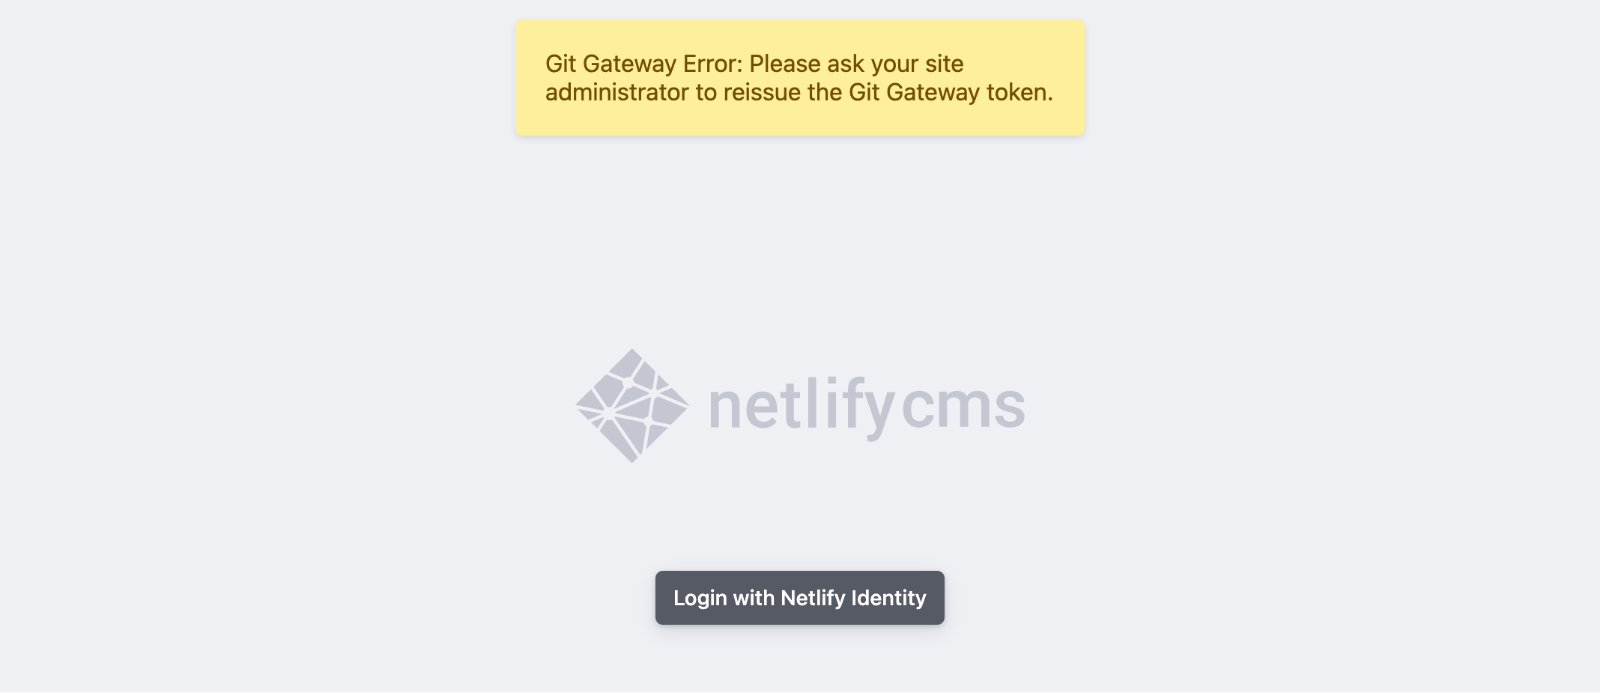 Git Gateway Error: Please ask your site administrator to reissue the Git Gateway token.